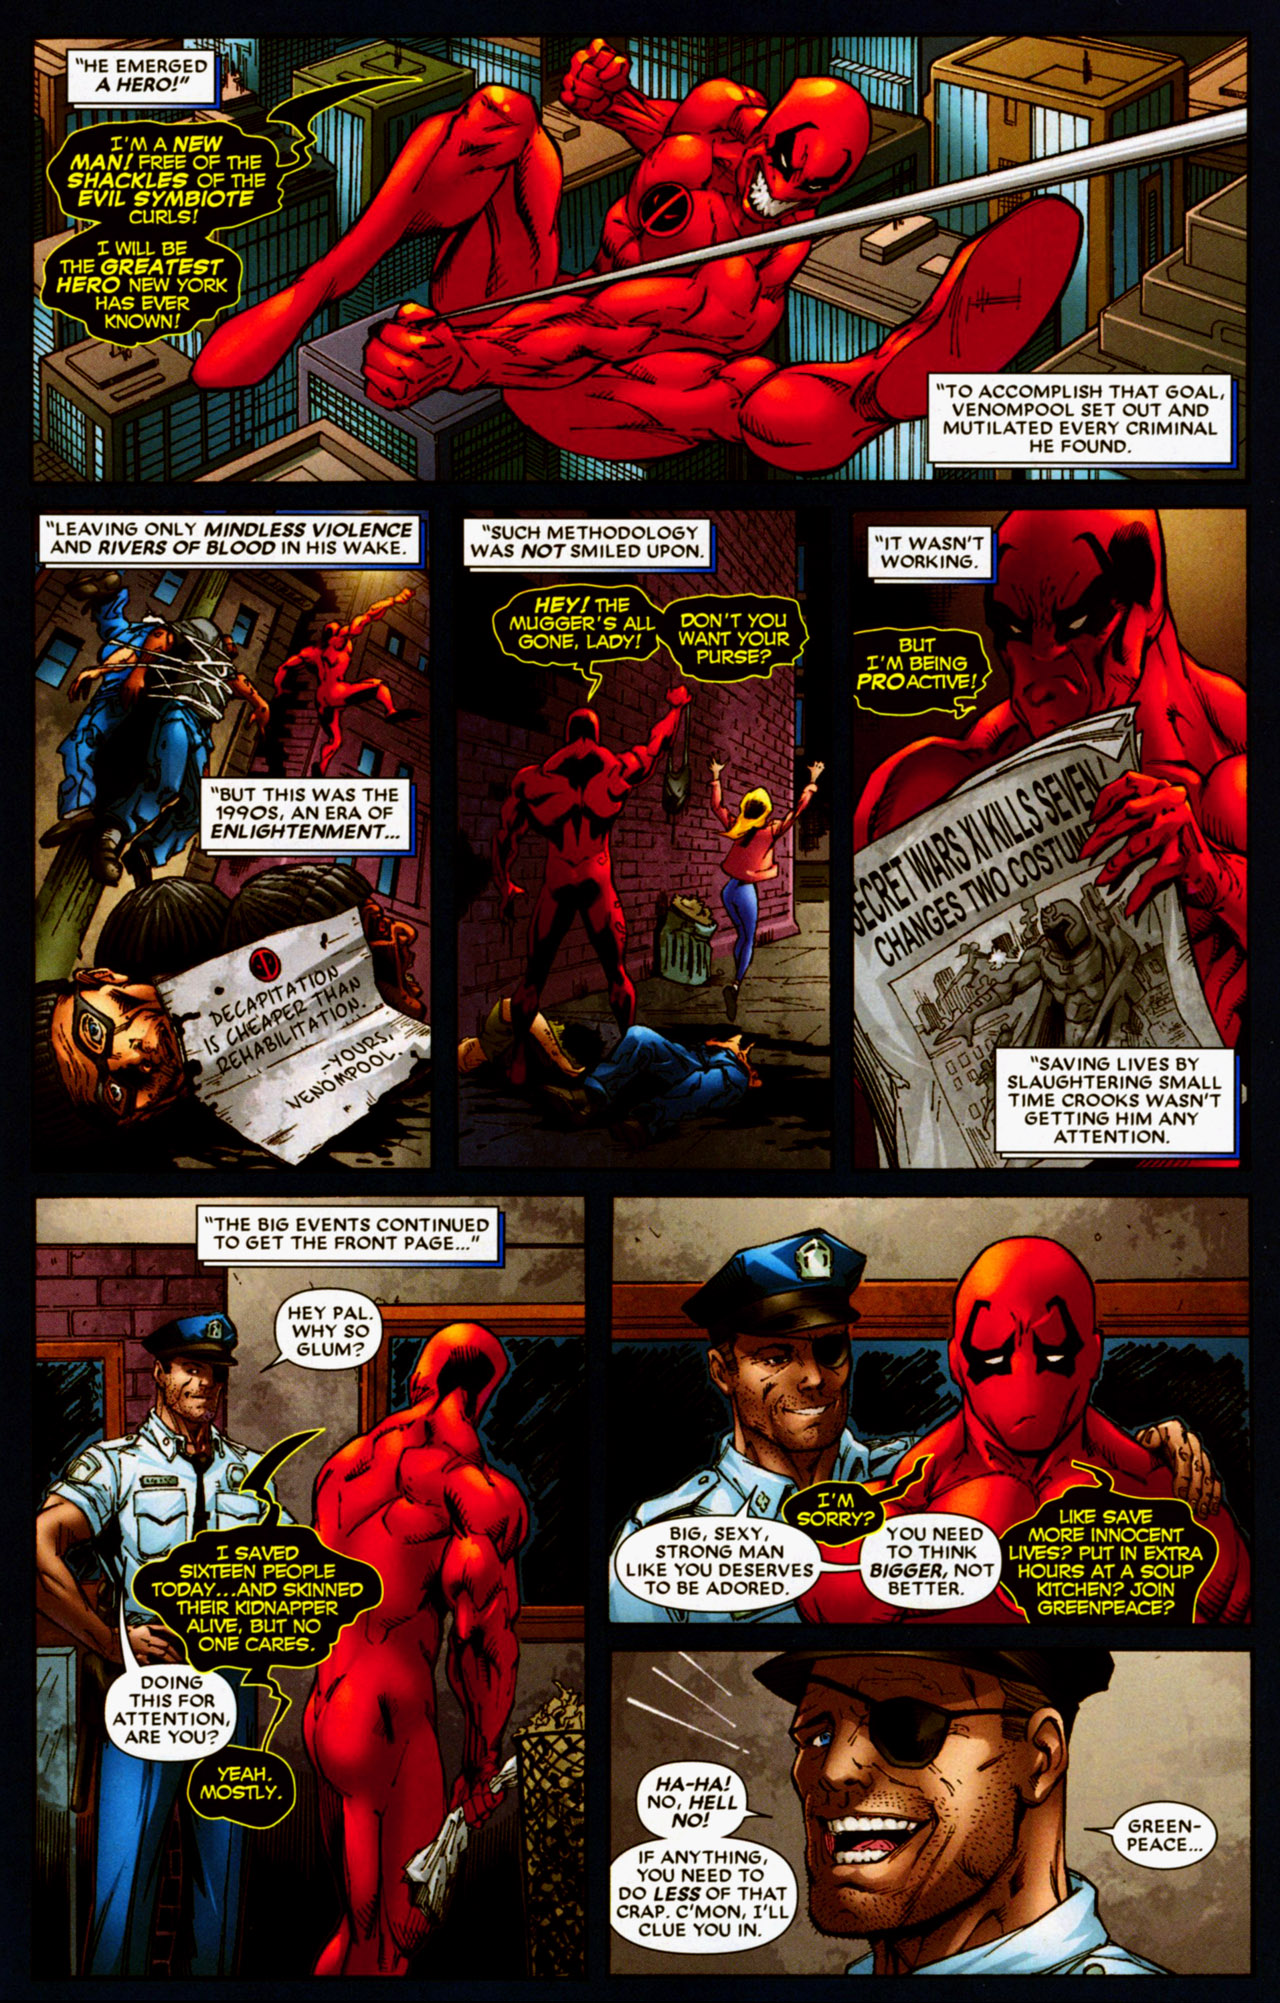 Venom/Deadpool: What If? #1 - What If Venom Possessed Deadpool? 